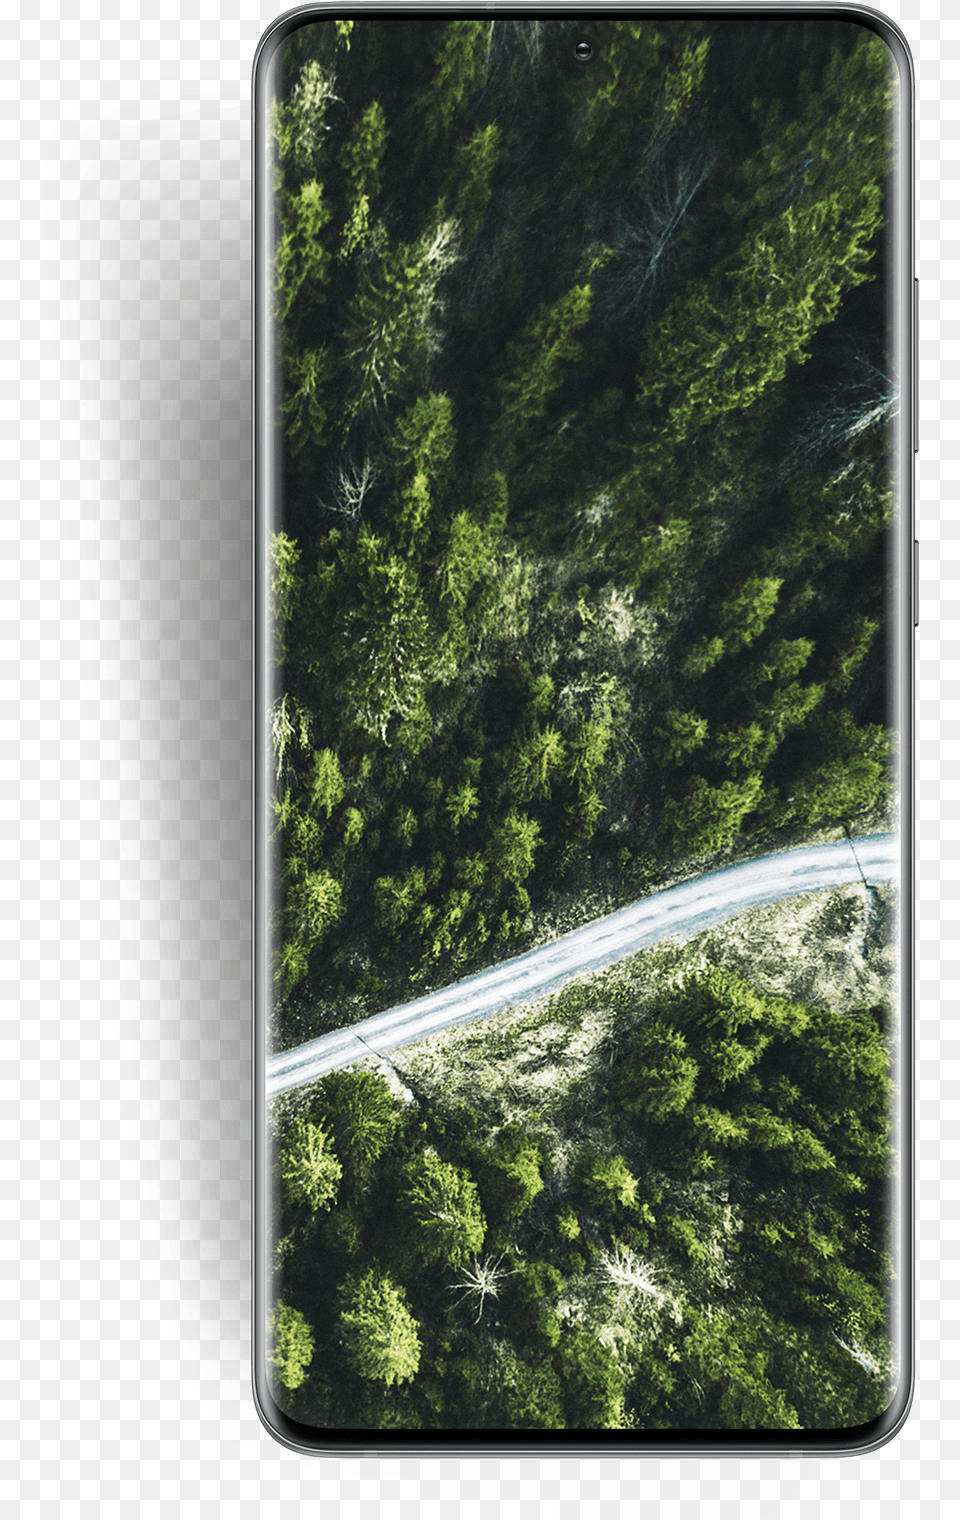 Design Samsung Galaxy S20 U0026 Ultra The Official Galaxy S20 Landscape, Woodland, Vegetation, Tree, Rainforest Png Image